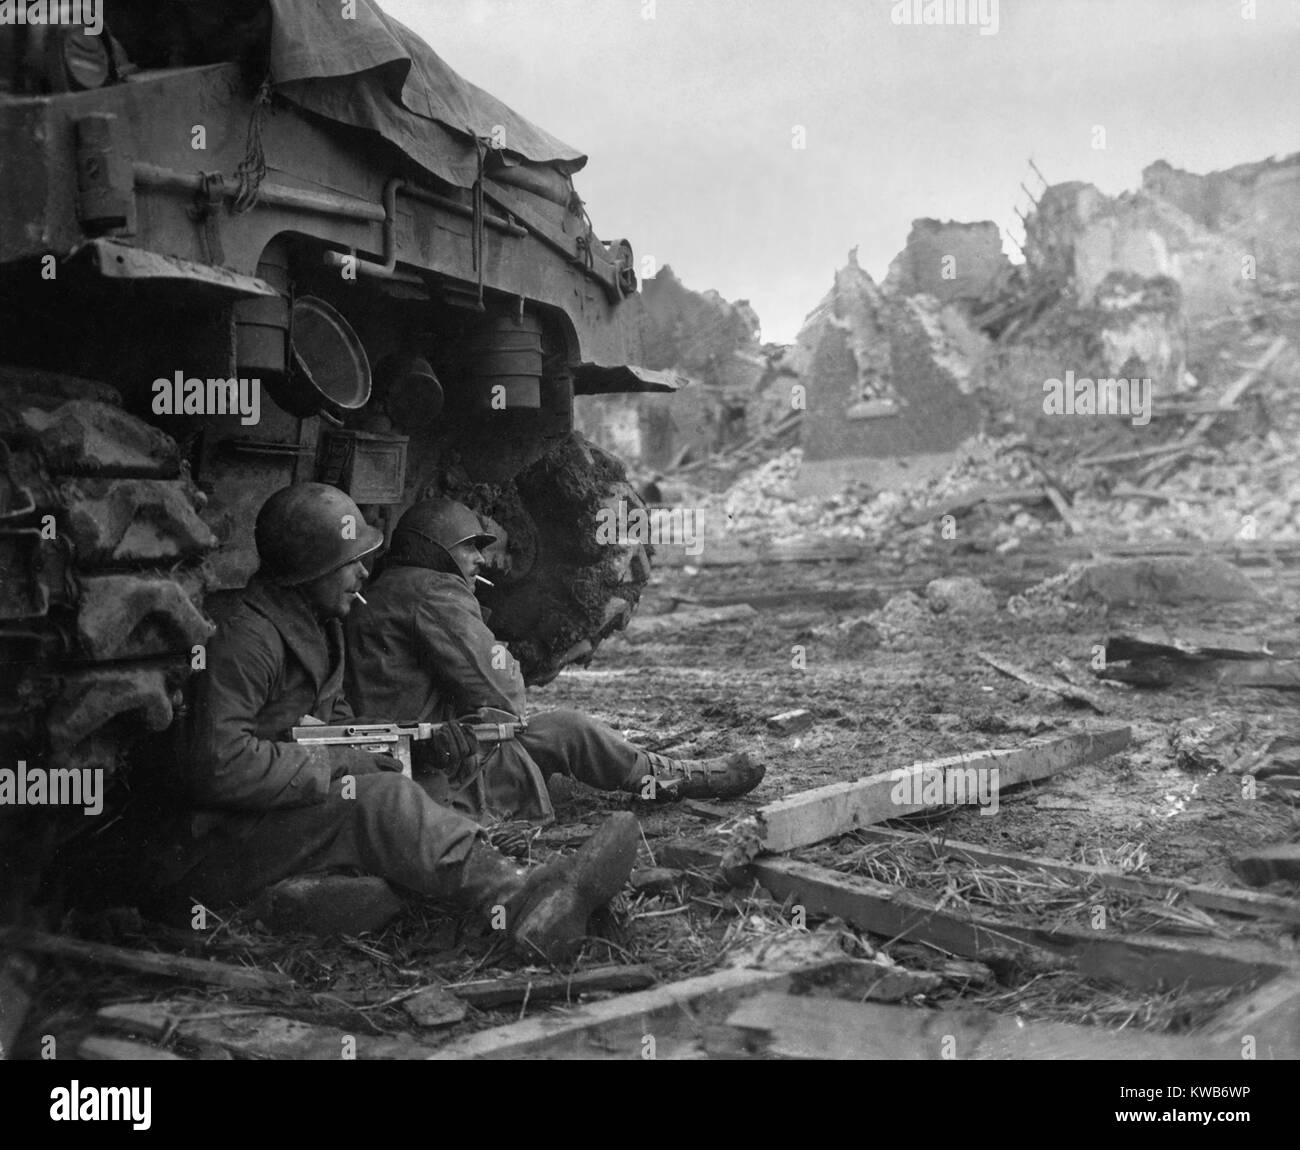 U.S. Infantrymen sheltering behind a M-4 Sherman tank during heavy German shelling. Dec. 11, 1944. Geich, Germany. World War 2. (BSLOC 2014 8 60) Stock Photo